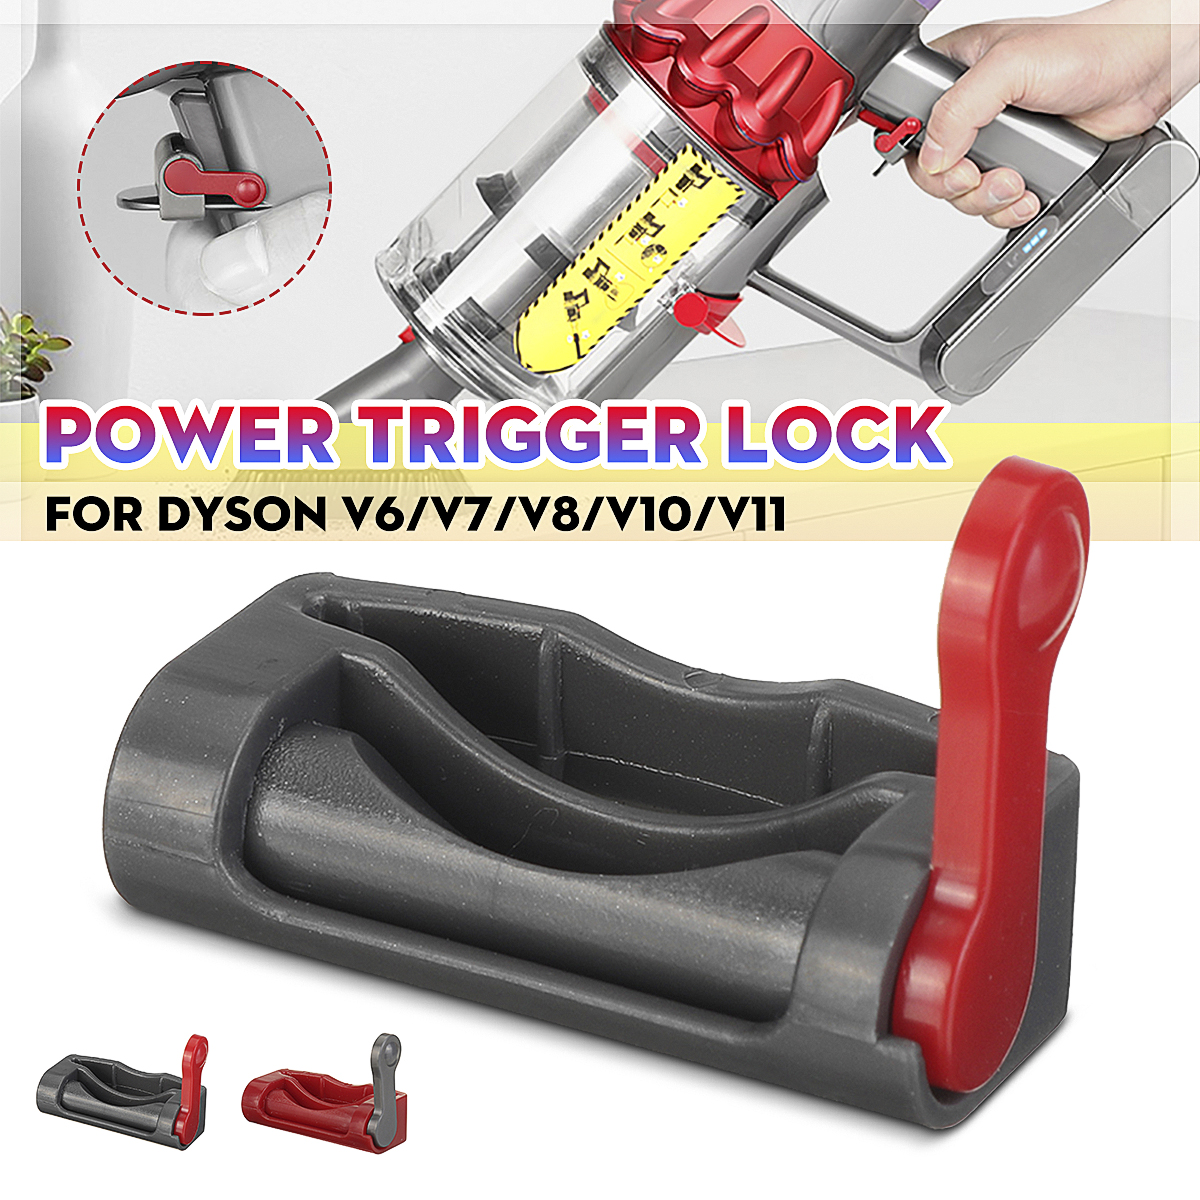 Find Trigger Lock Replacement for Dyson V6 V7 V8 V10 V11 Vacuum Cleaner [Not-original] for Sale on Gipsybee.com with cryptocurrencies